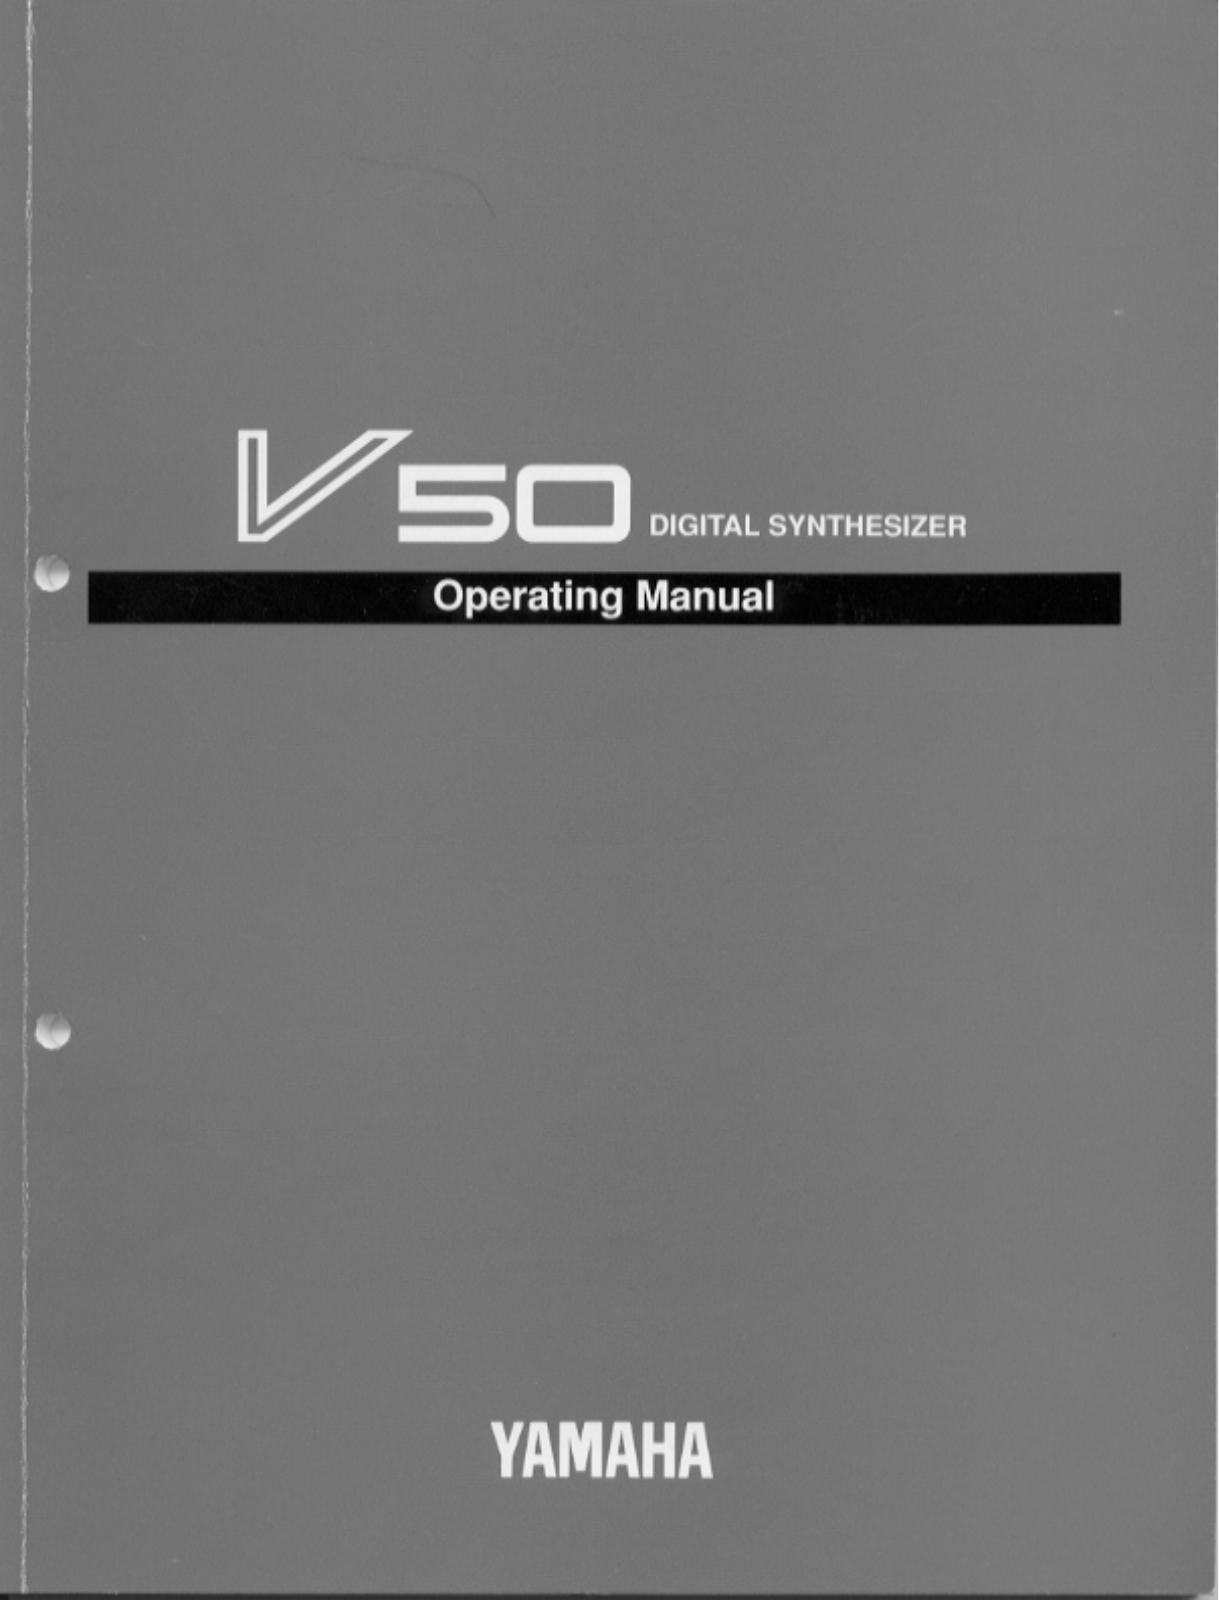 Yamaha V50 User Manual